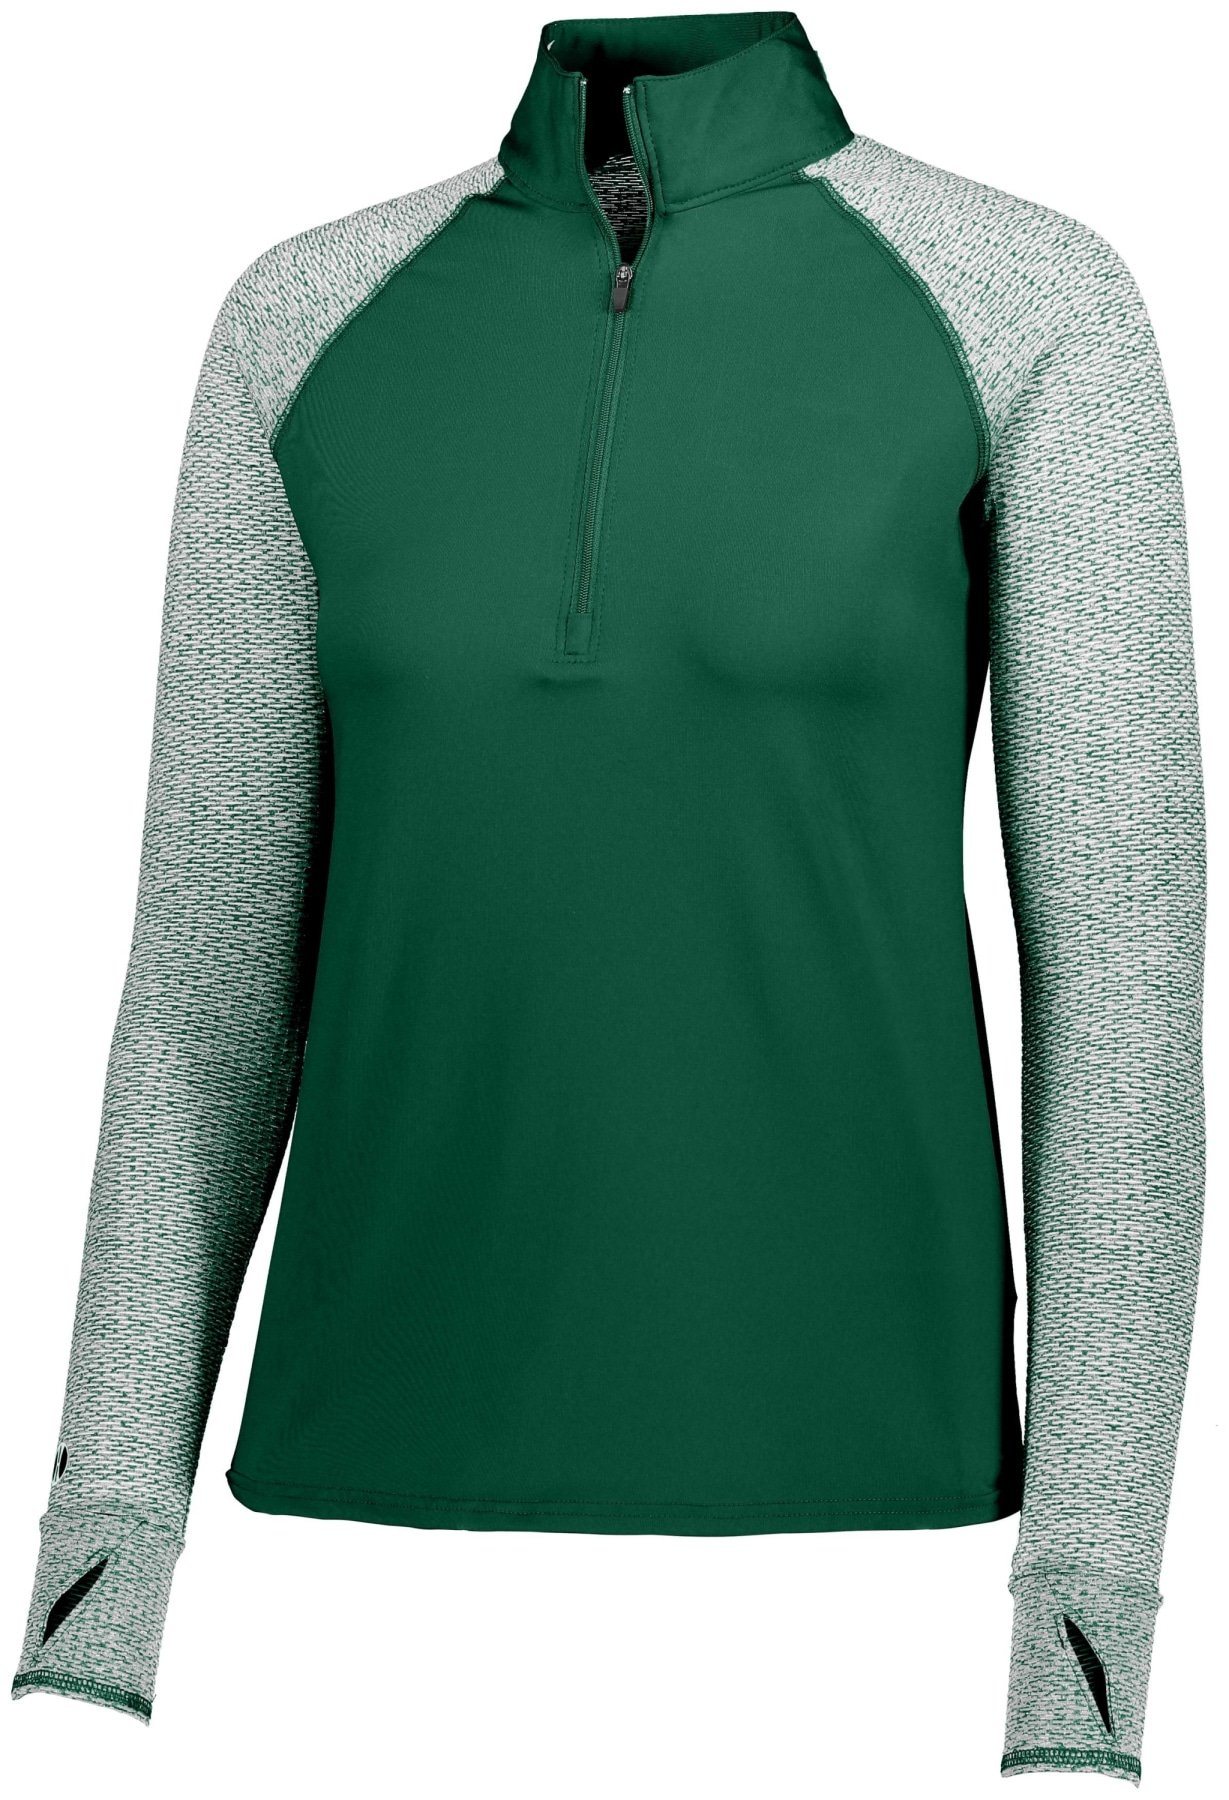 Ladies Athletic Shirt, Long Sleeve Axis 1/2 Zip Pullover 39